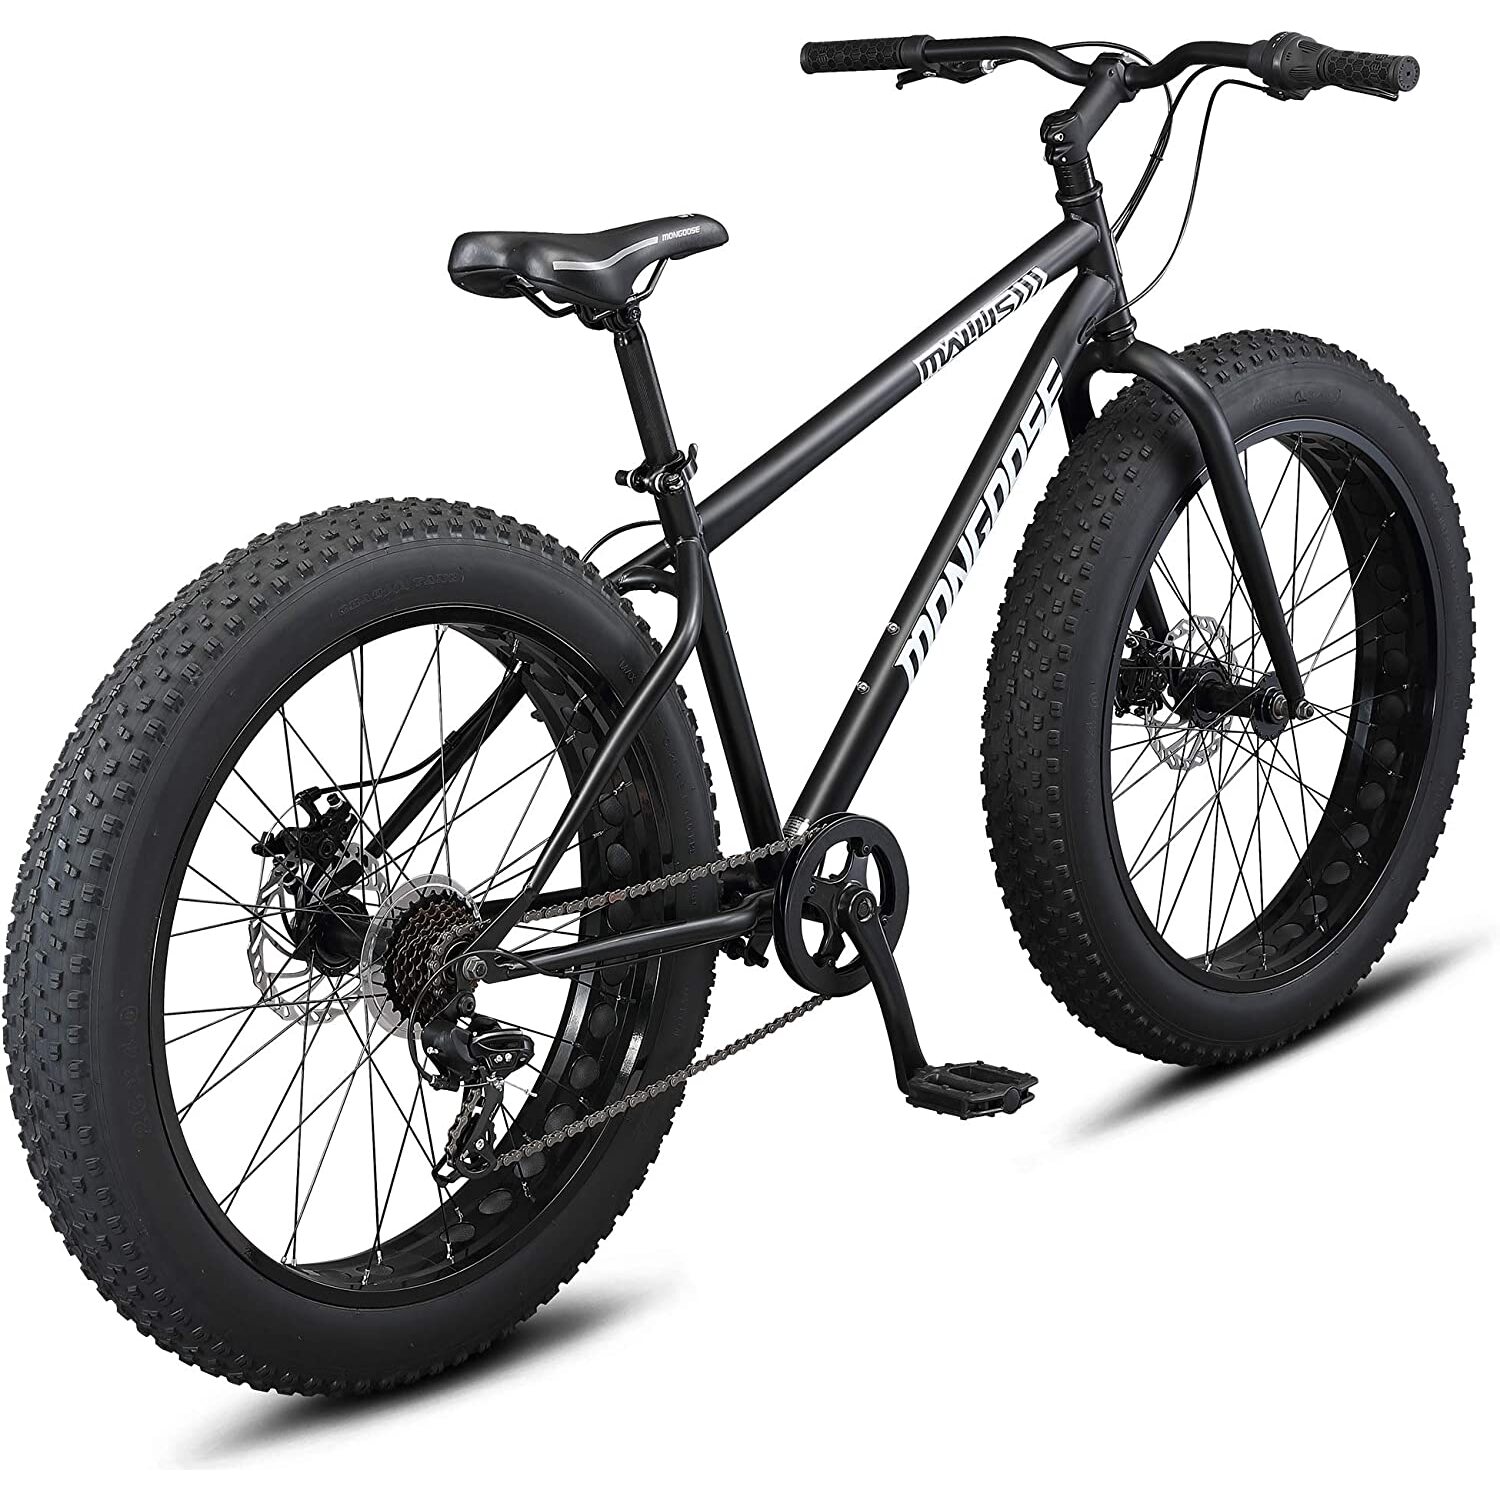 26" Mongoose Malus Adult Fat Tire Mountain Bike, Black - image 2 of 6